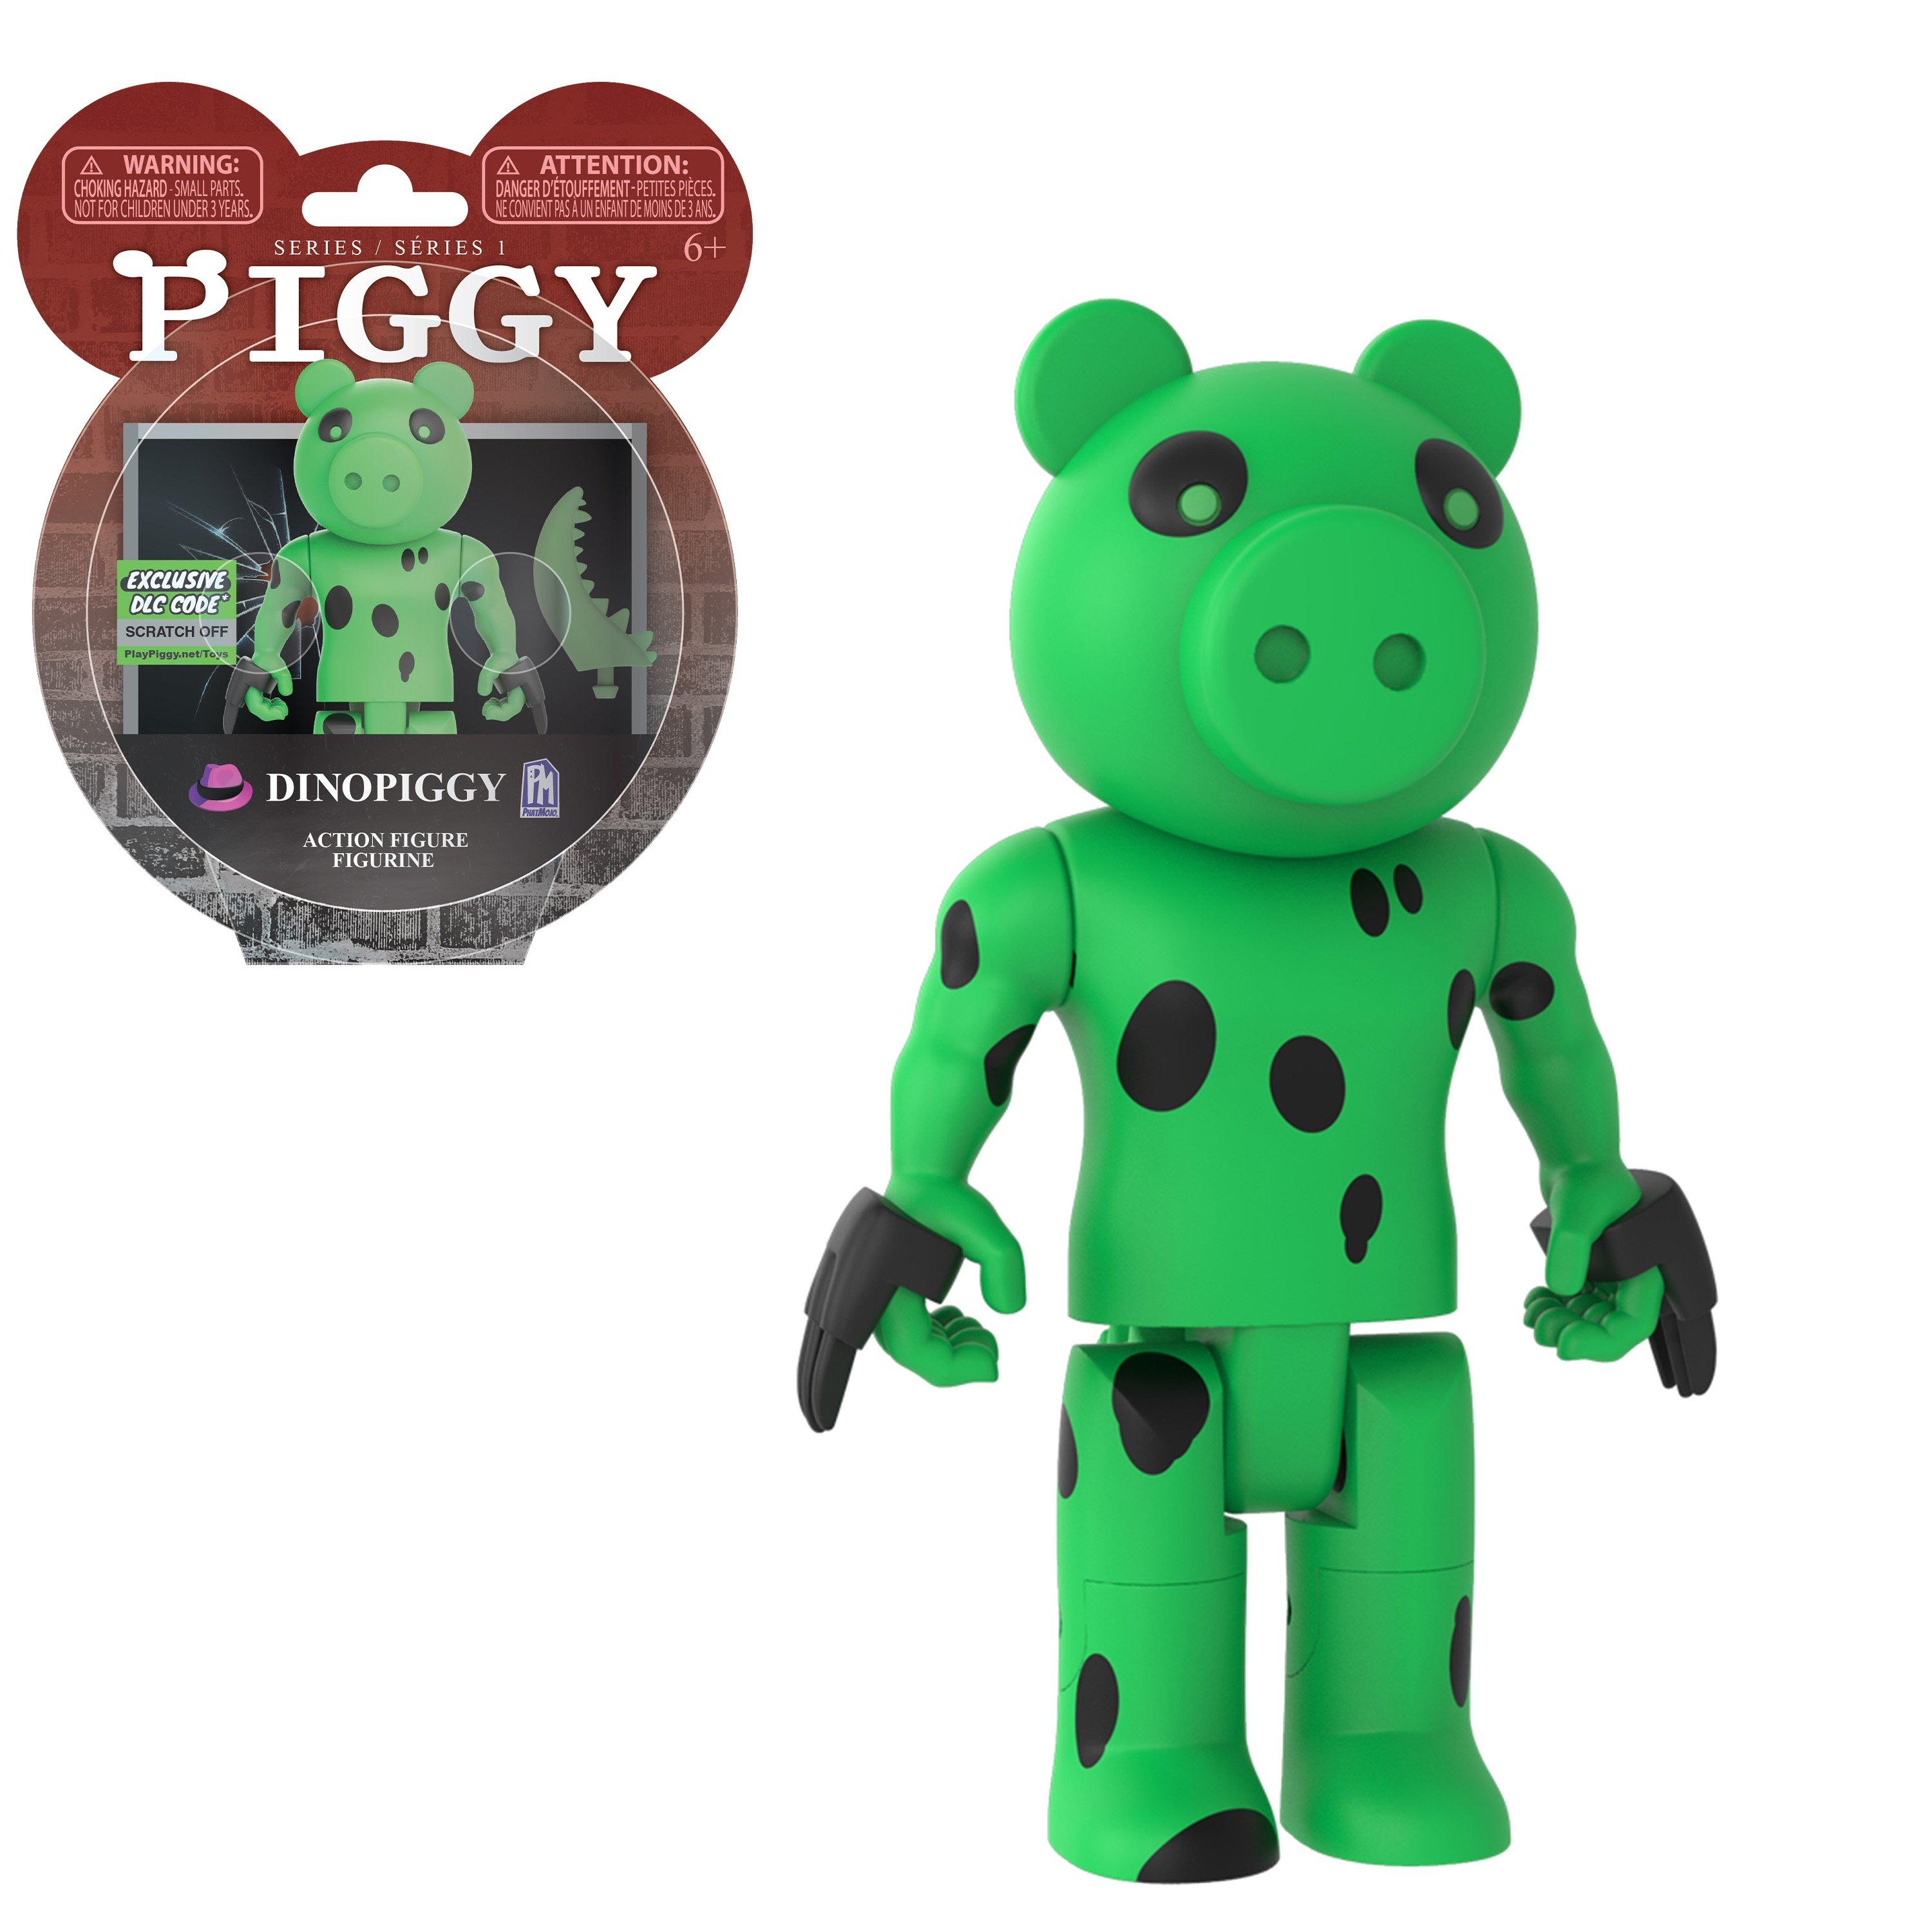 Piggy Dinopiggy Series 1 Action Figure Gamestop - how to be a pro at roblox piggy